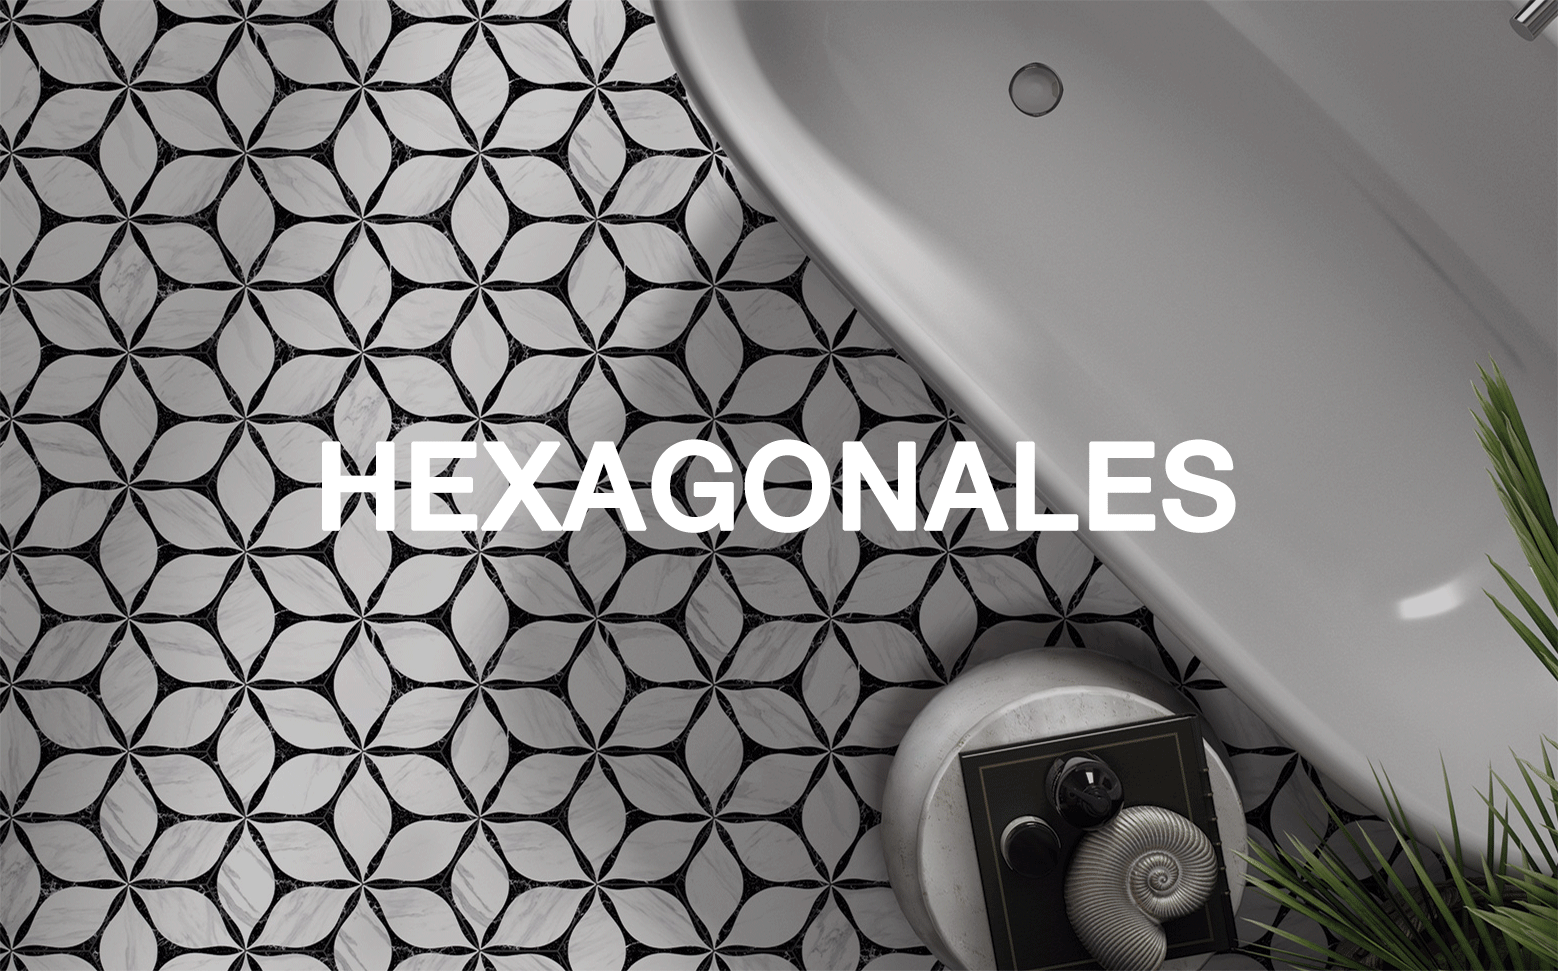 HEXAGONALES movil previa - Hexagonal